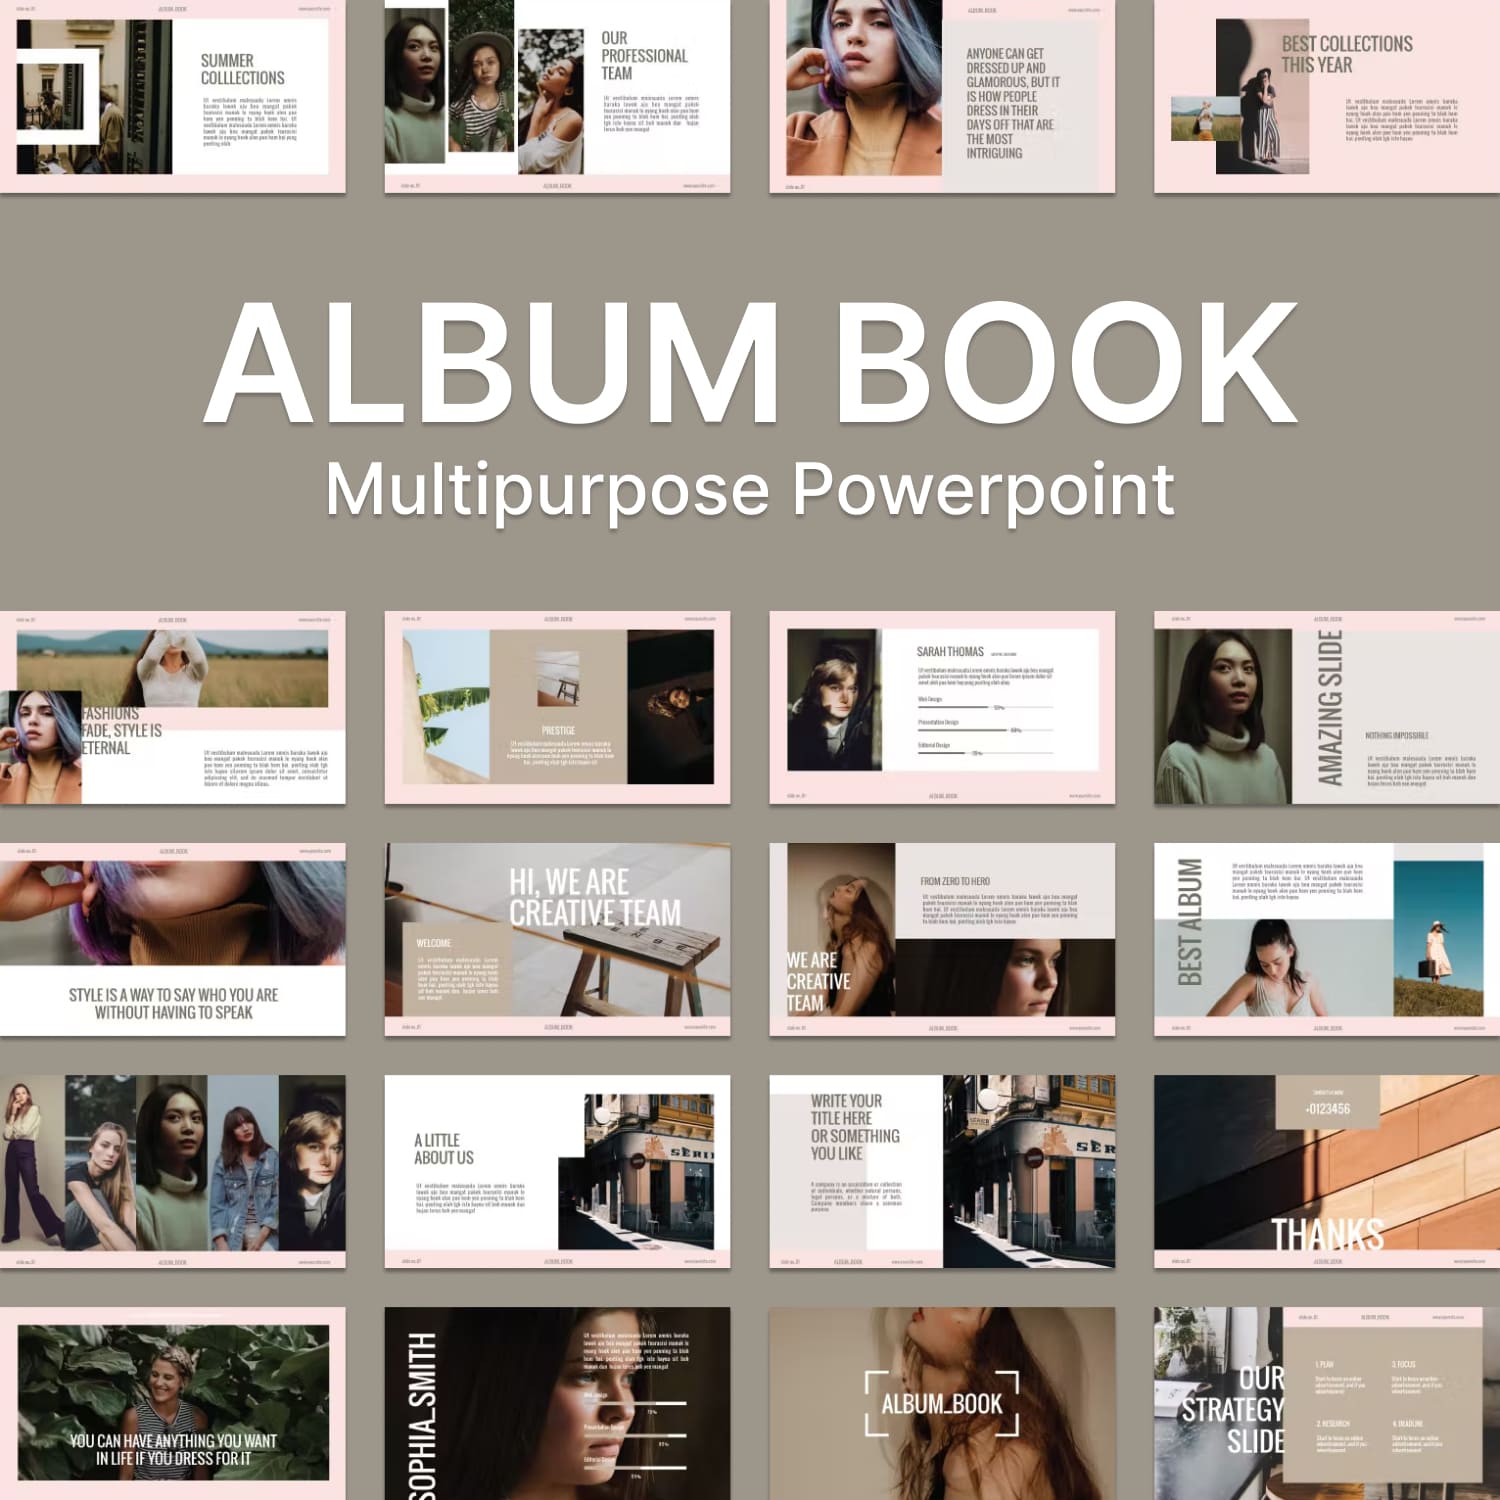 Album book multipurpose powerpoint - main image preview.